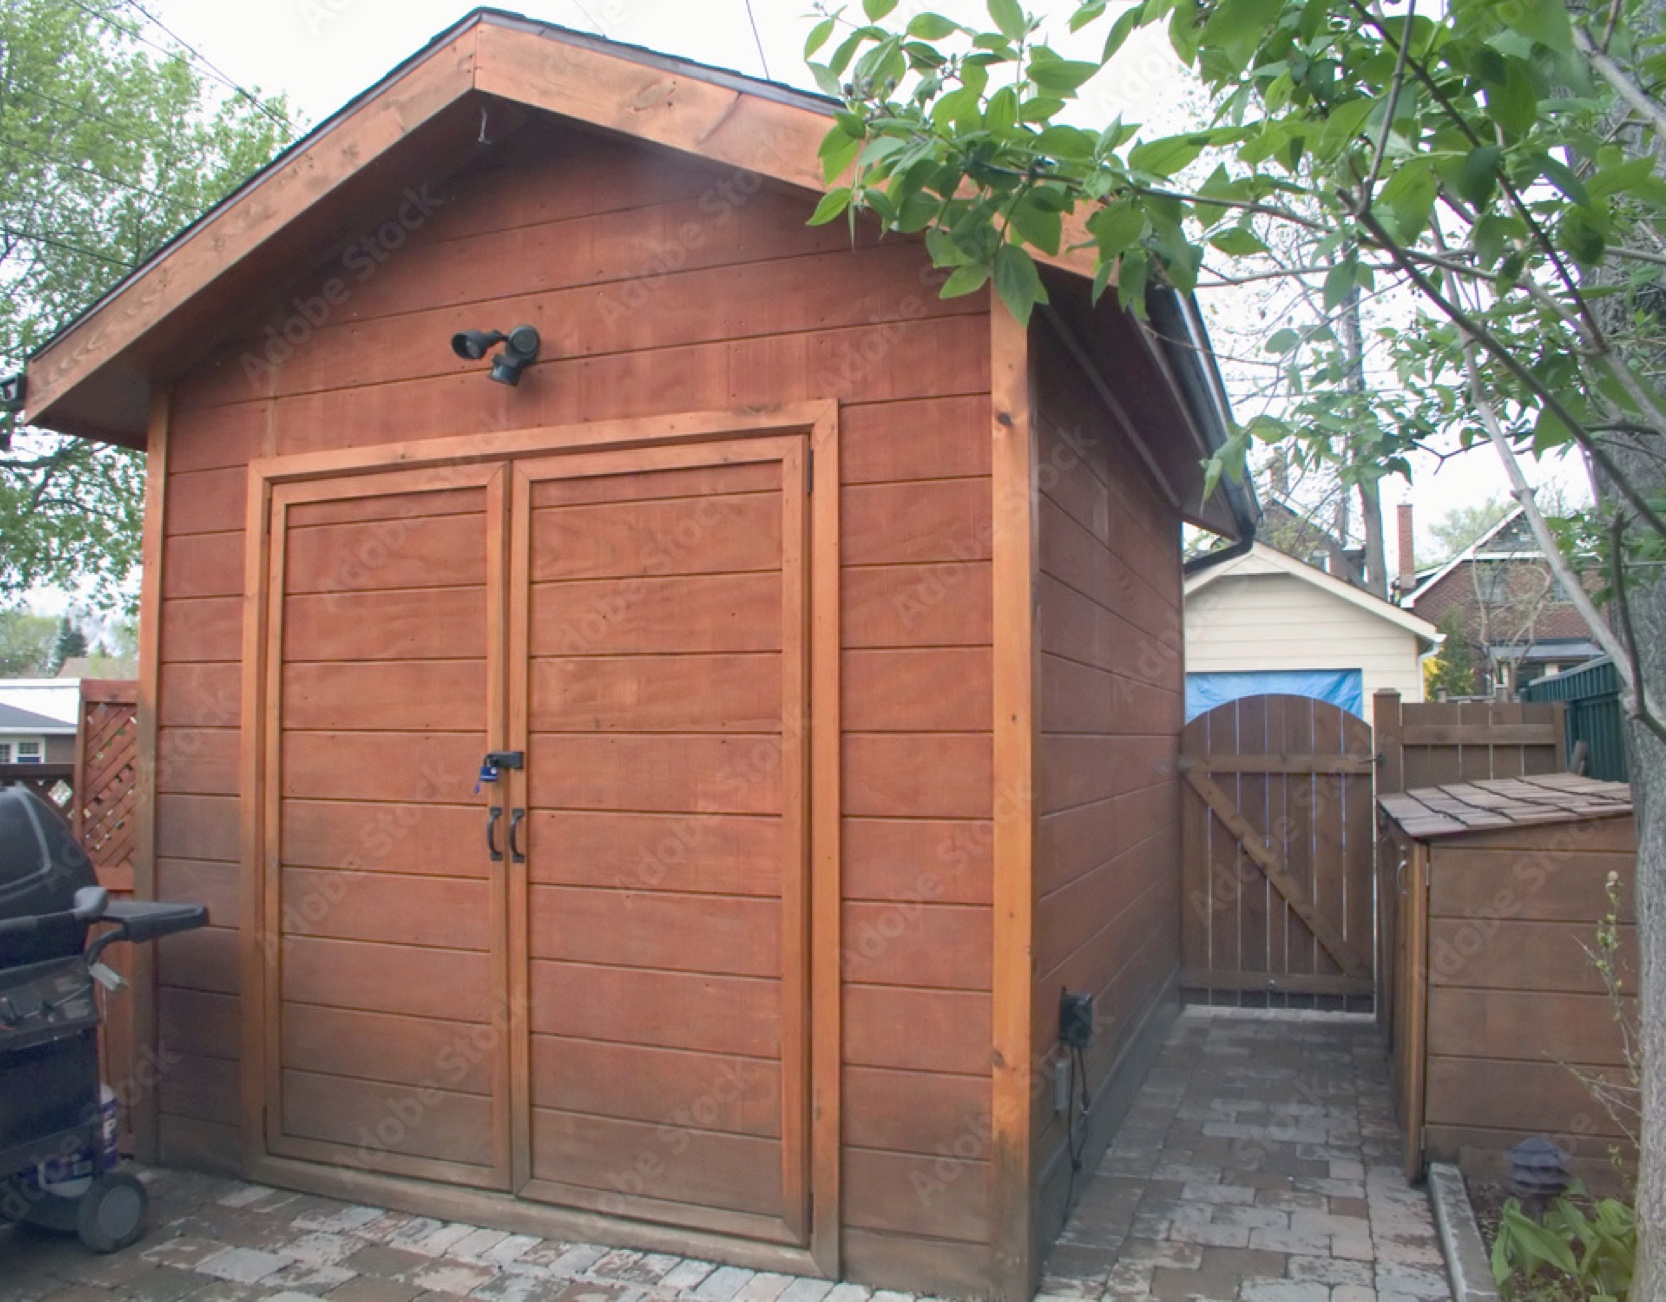 Brown shed in urban backyard